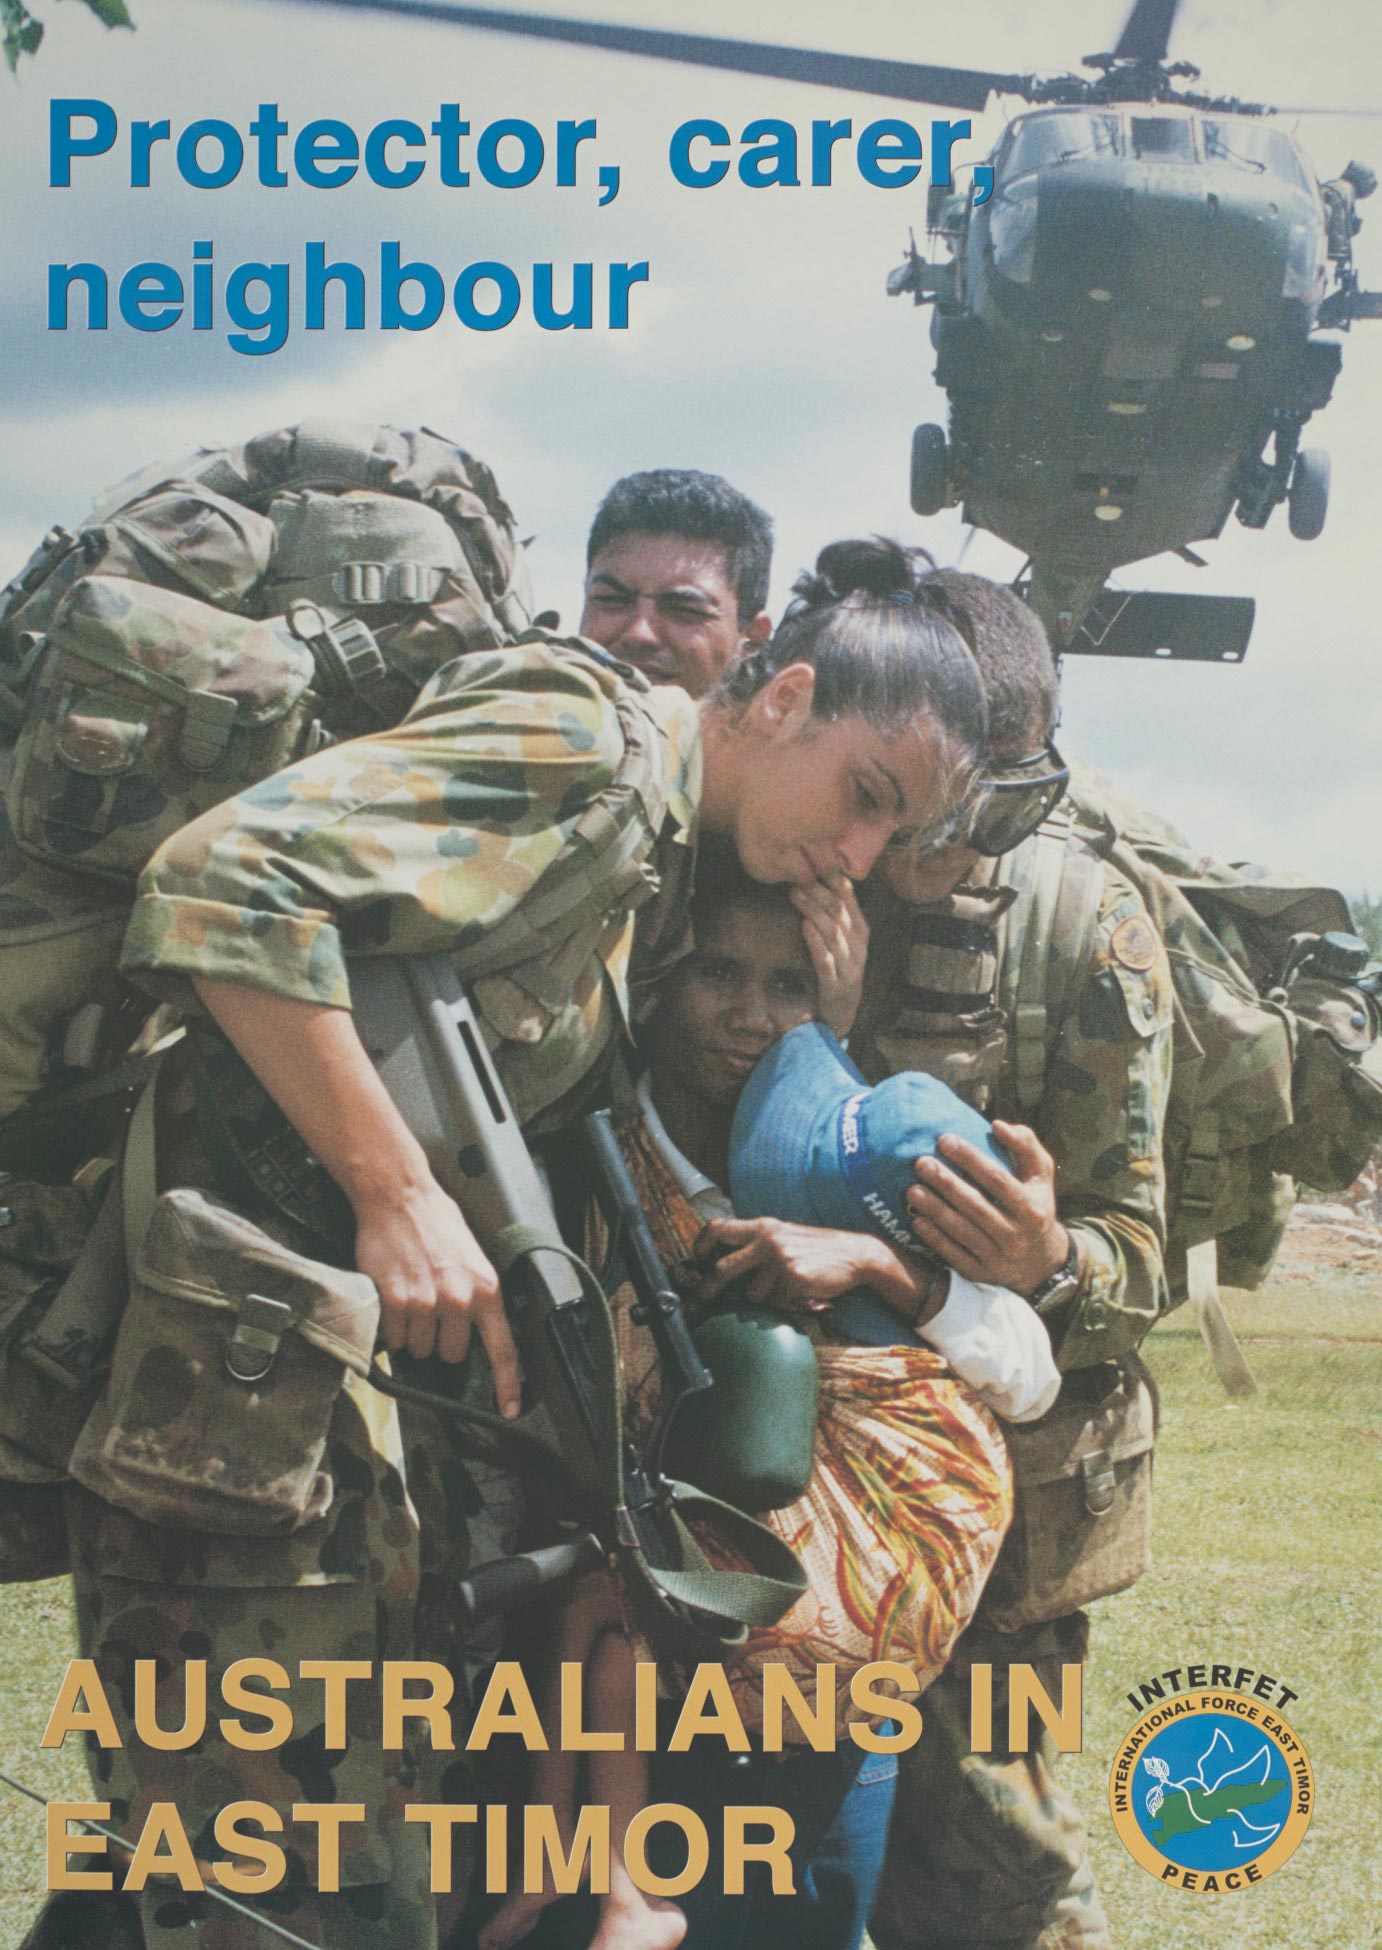 Poster showing Australian peacekeepers in East Timor.